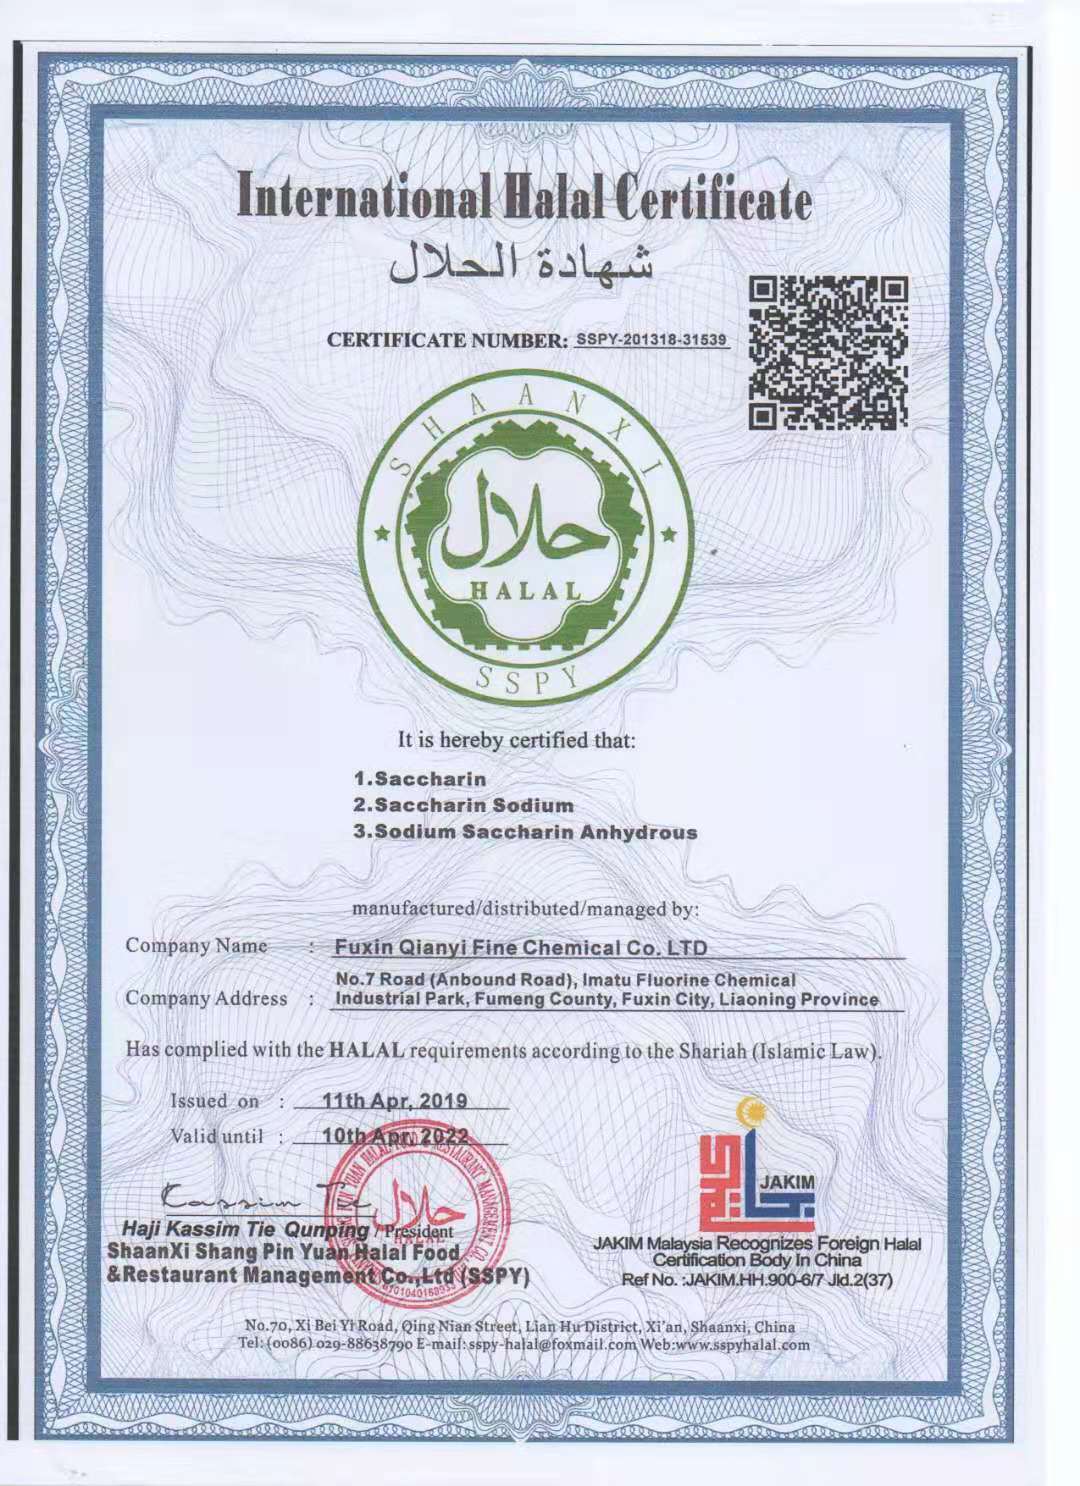 International Halal Certificate.jpg